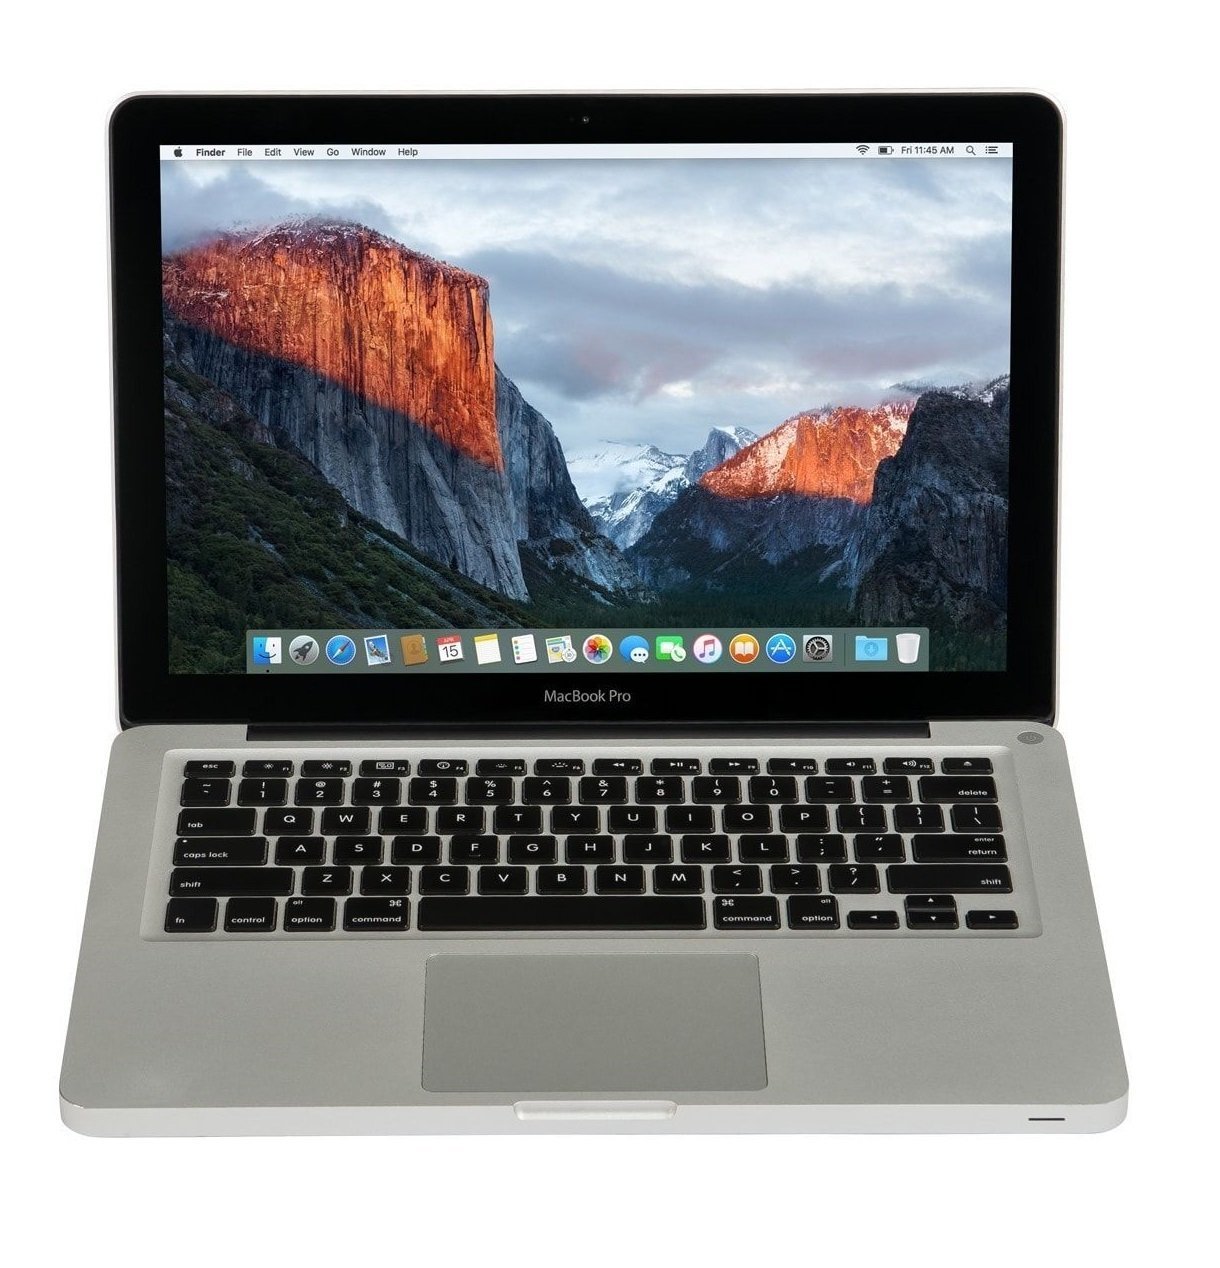 Apple MacBook Pro Core i7-2635QM Quad-Core 2.0GHz 8GB memory, 500gb Selection DVD±RW 15.4" Radeon HD 6490M Notebook (Early 2011) - Grade B+